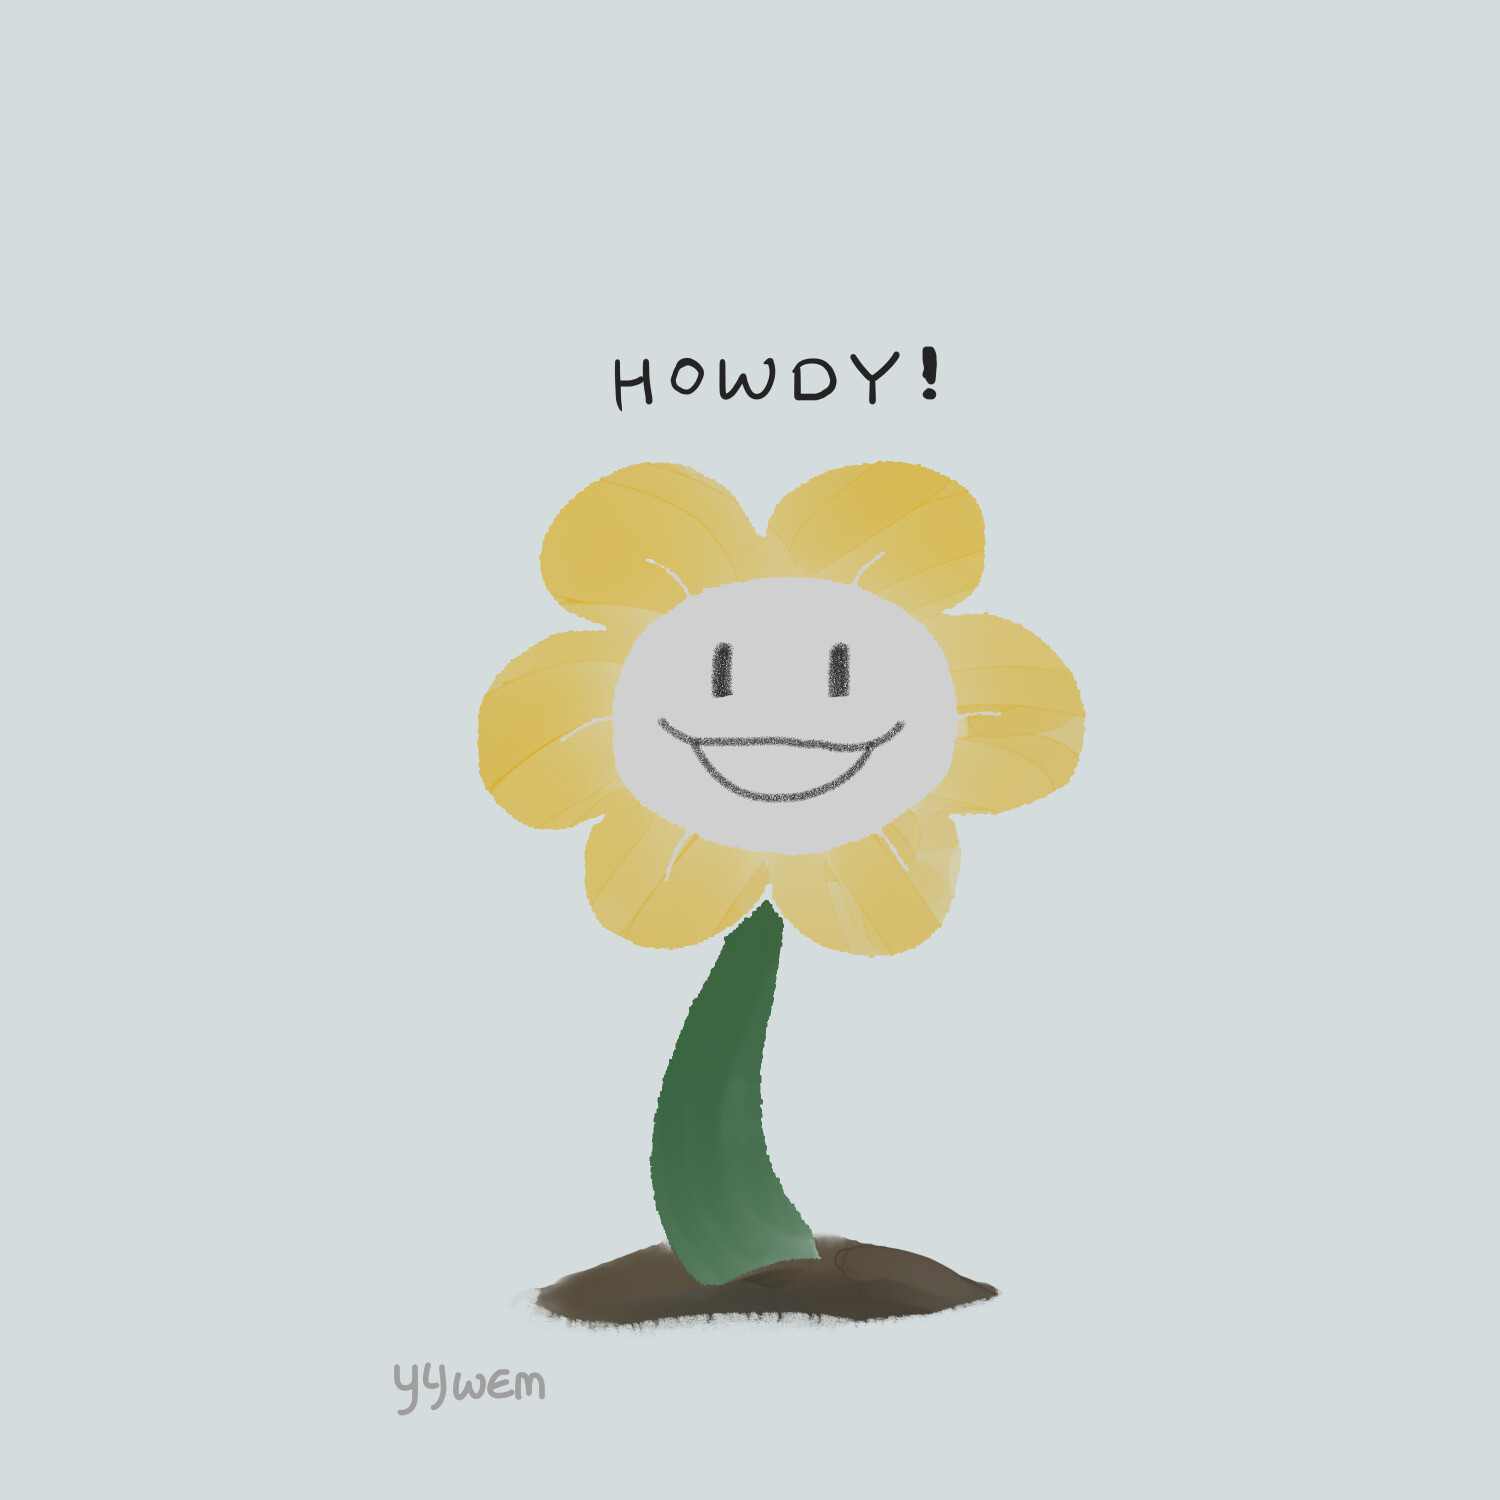 ArtStation - howdy, im flowey, flowey the flower.